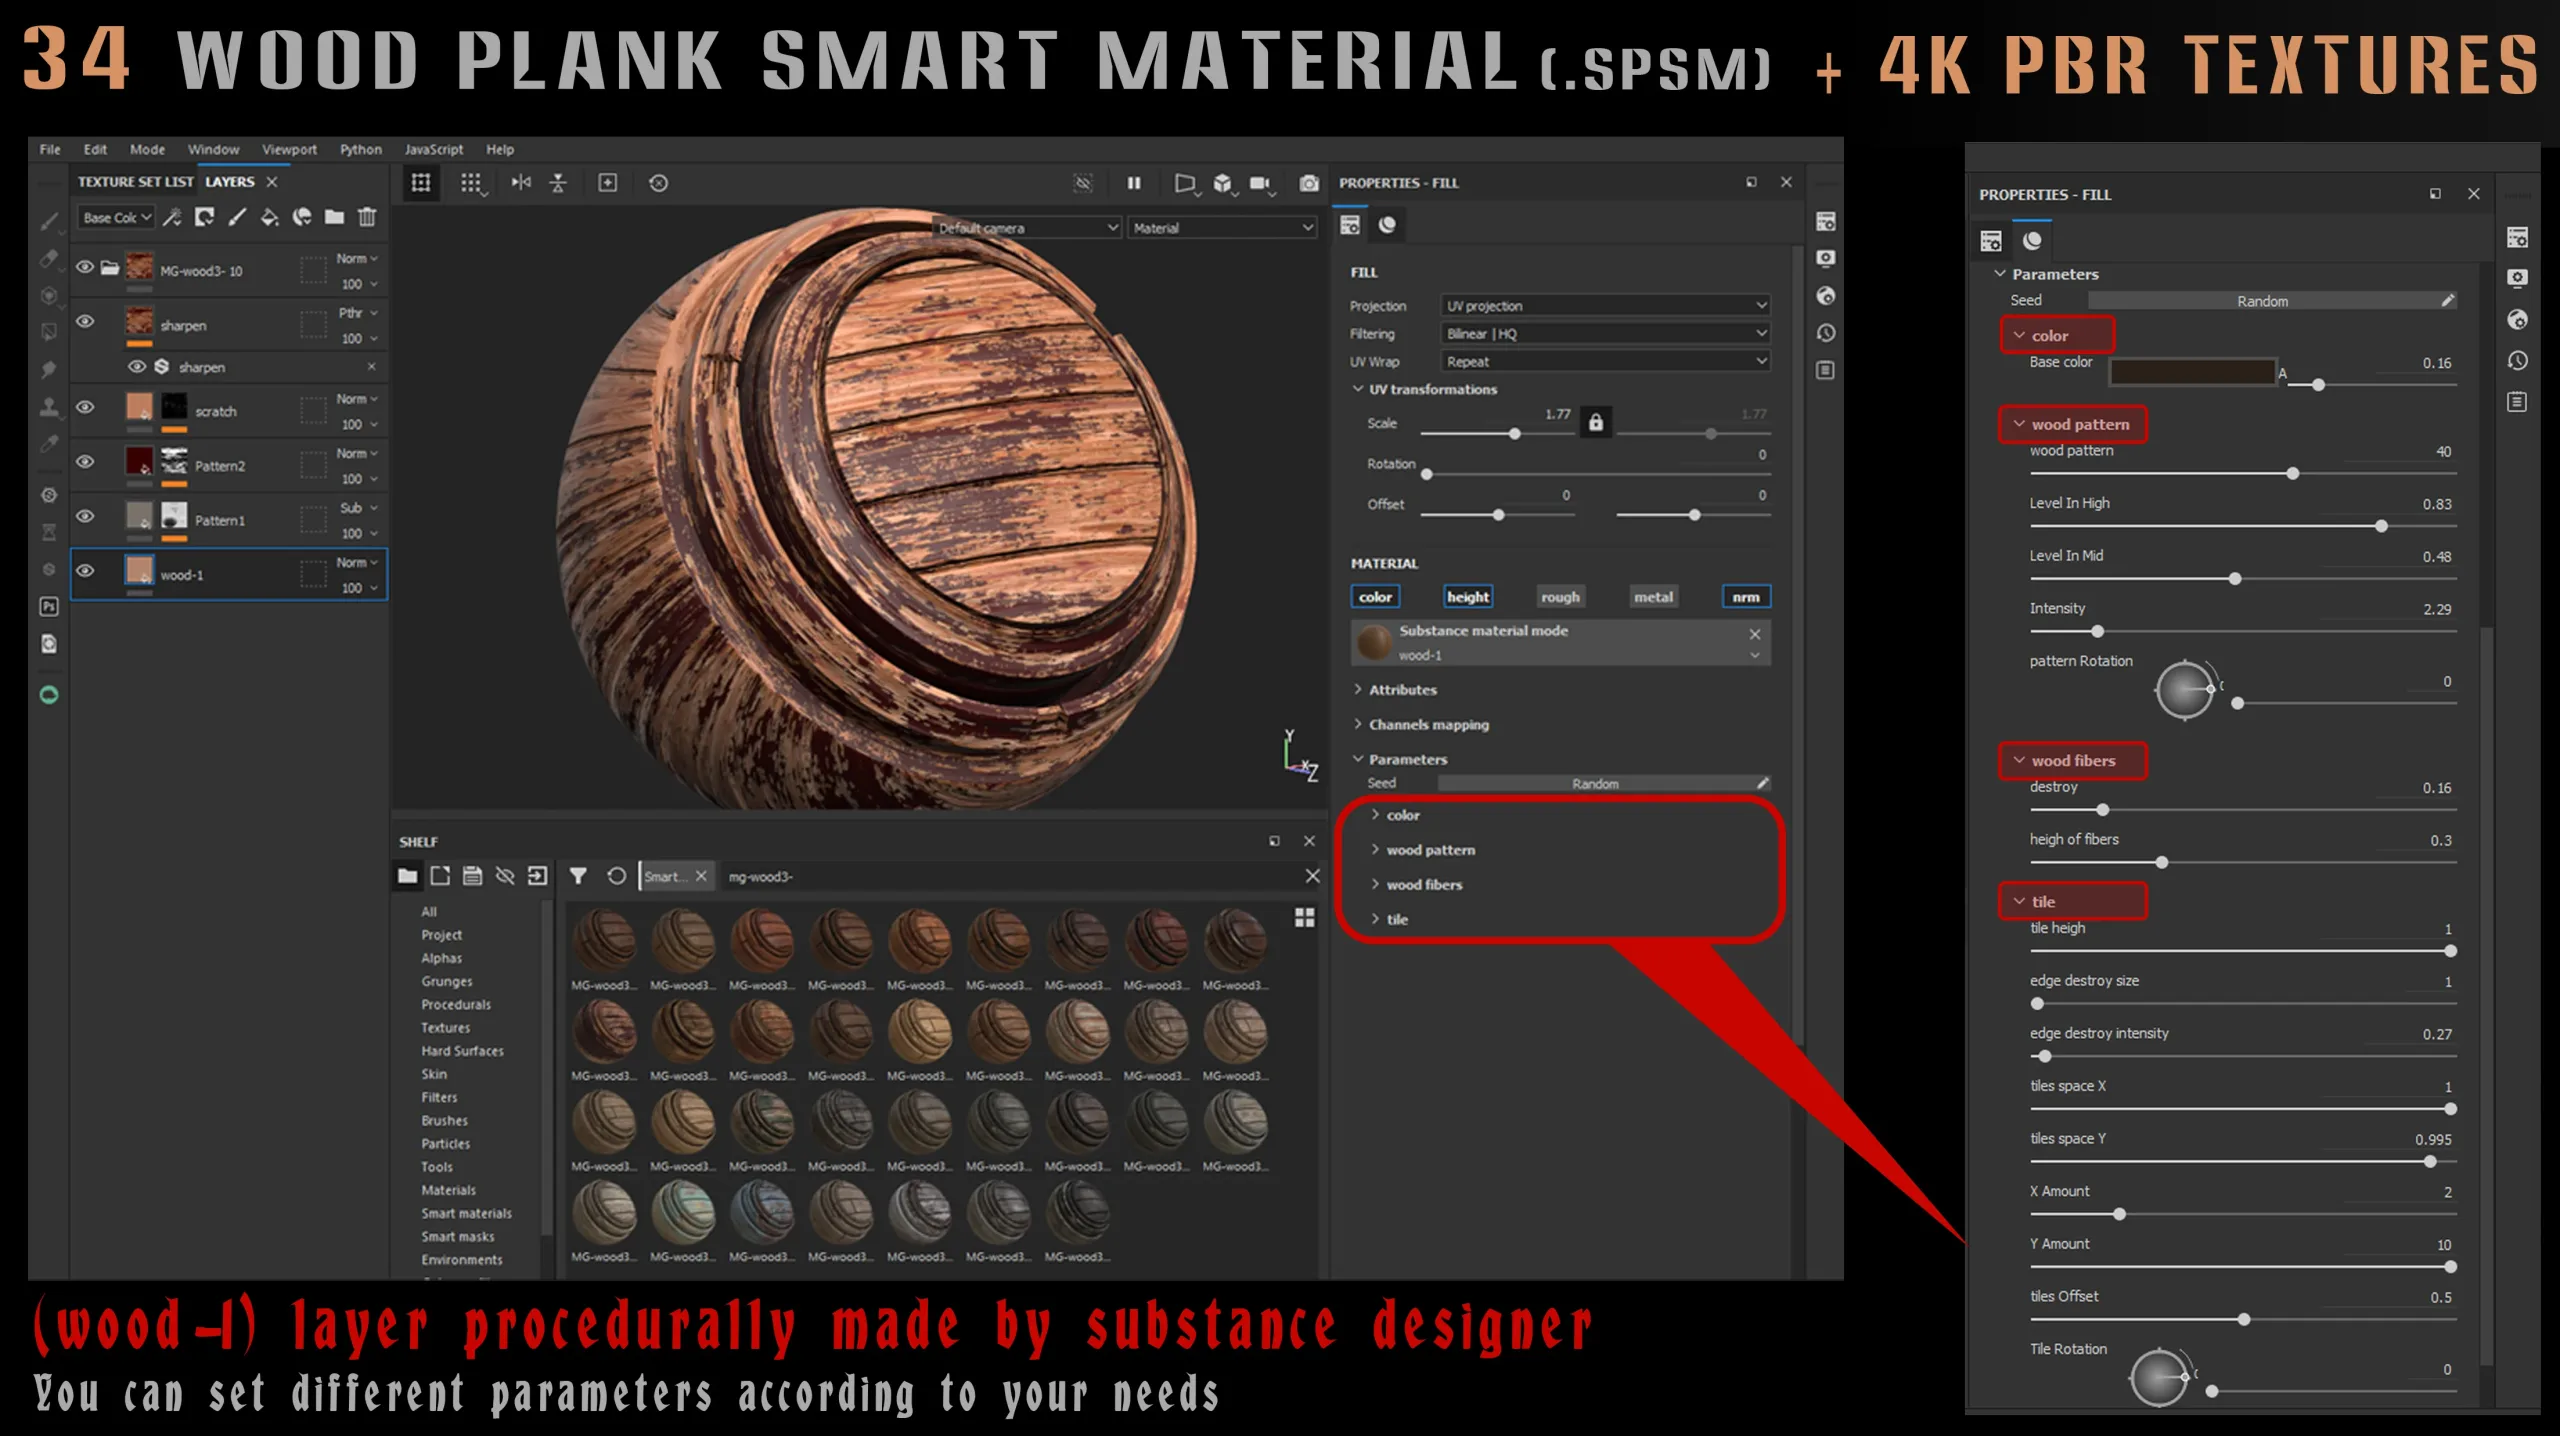 34 Wood plank smart material + 4k PBR textures - Vol 11